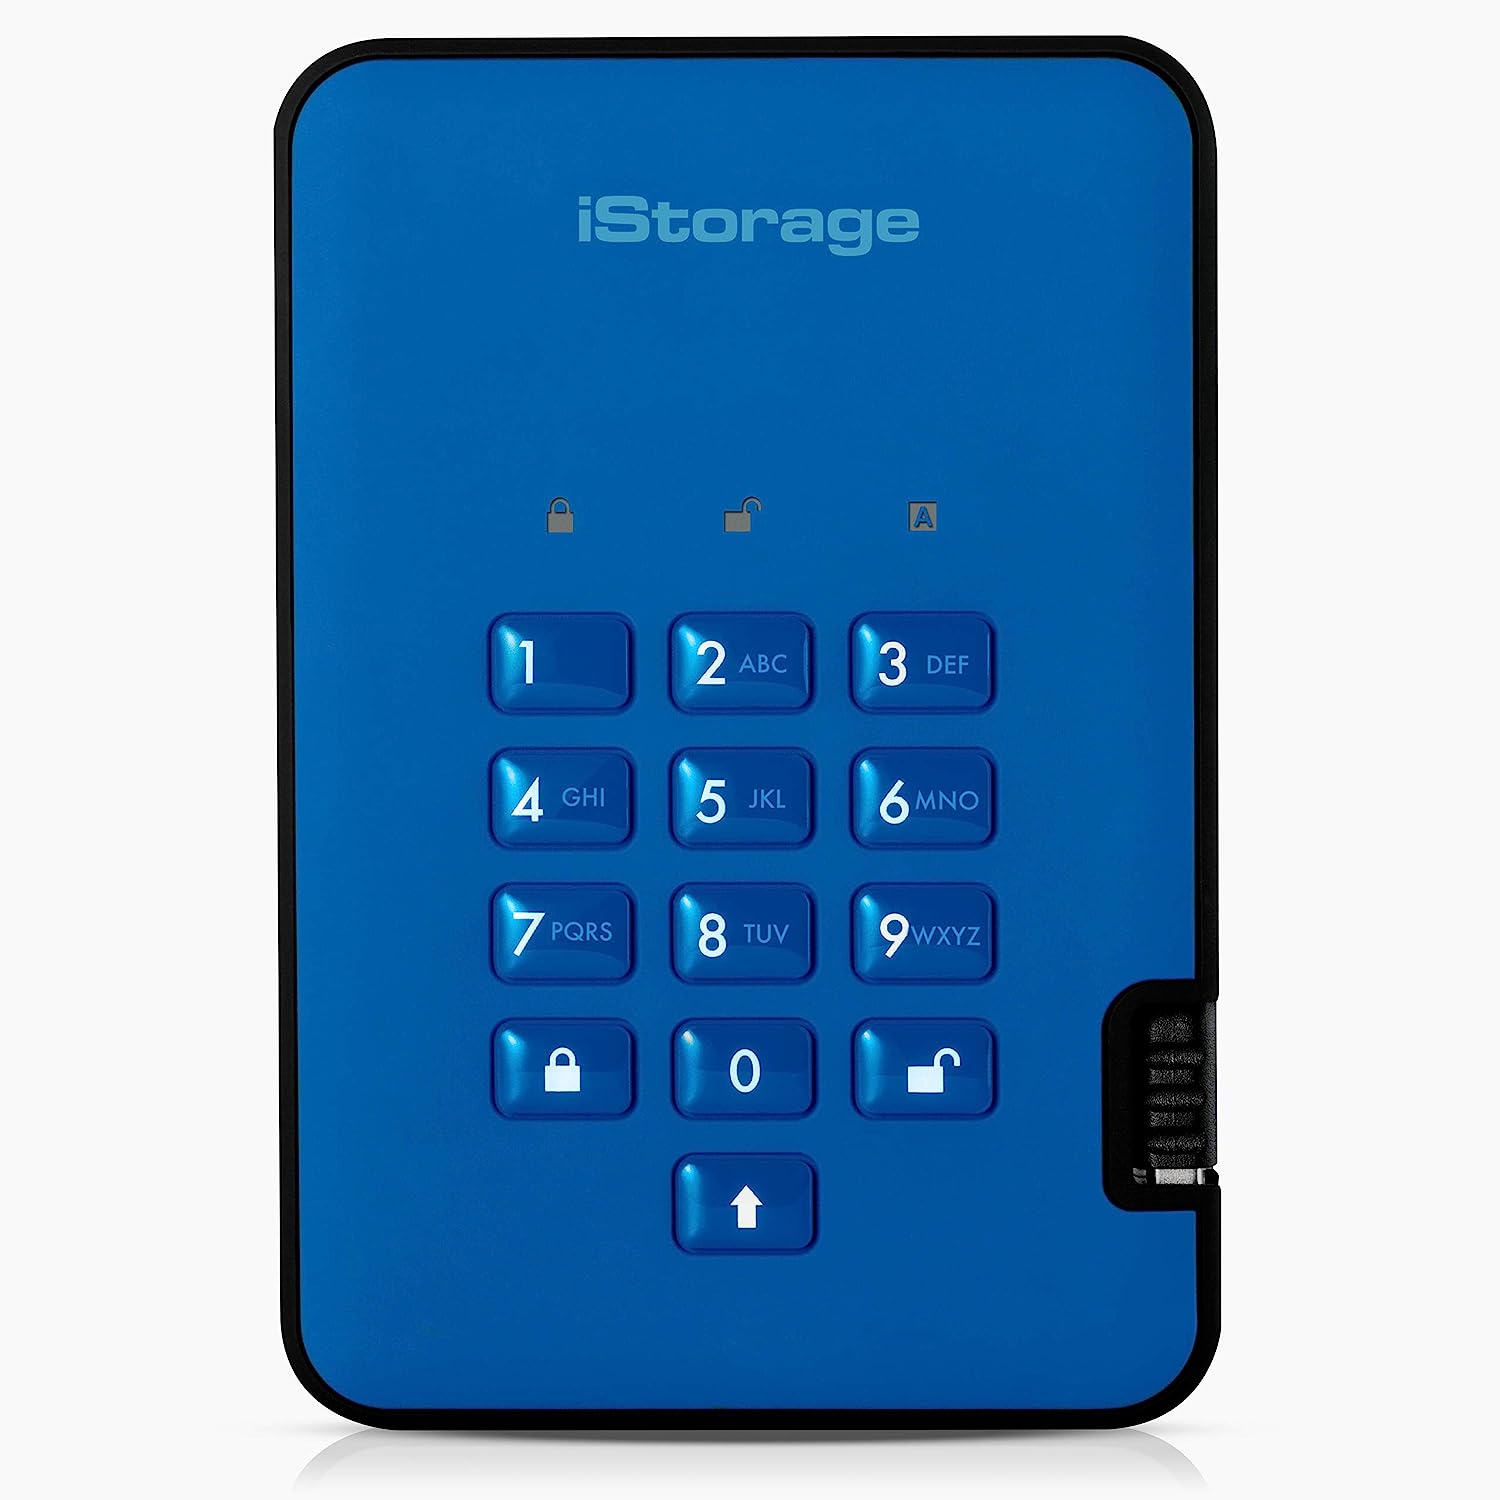 iStorage is-da2 – 256-ssd-128-b 128 GB diskashur2 USB 3.1 portátil cifrados Disco Duro SSD – Phantom negro, Azul Océano